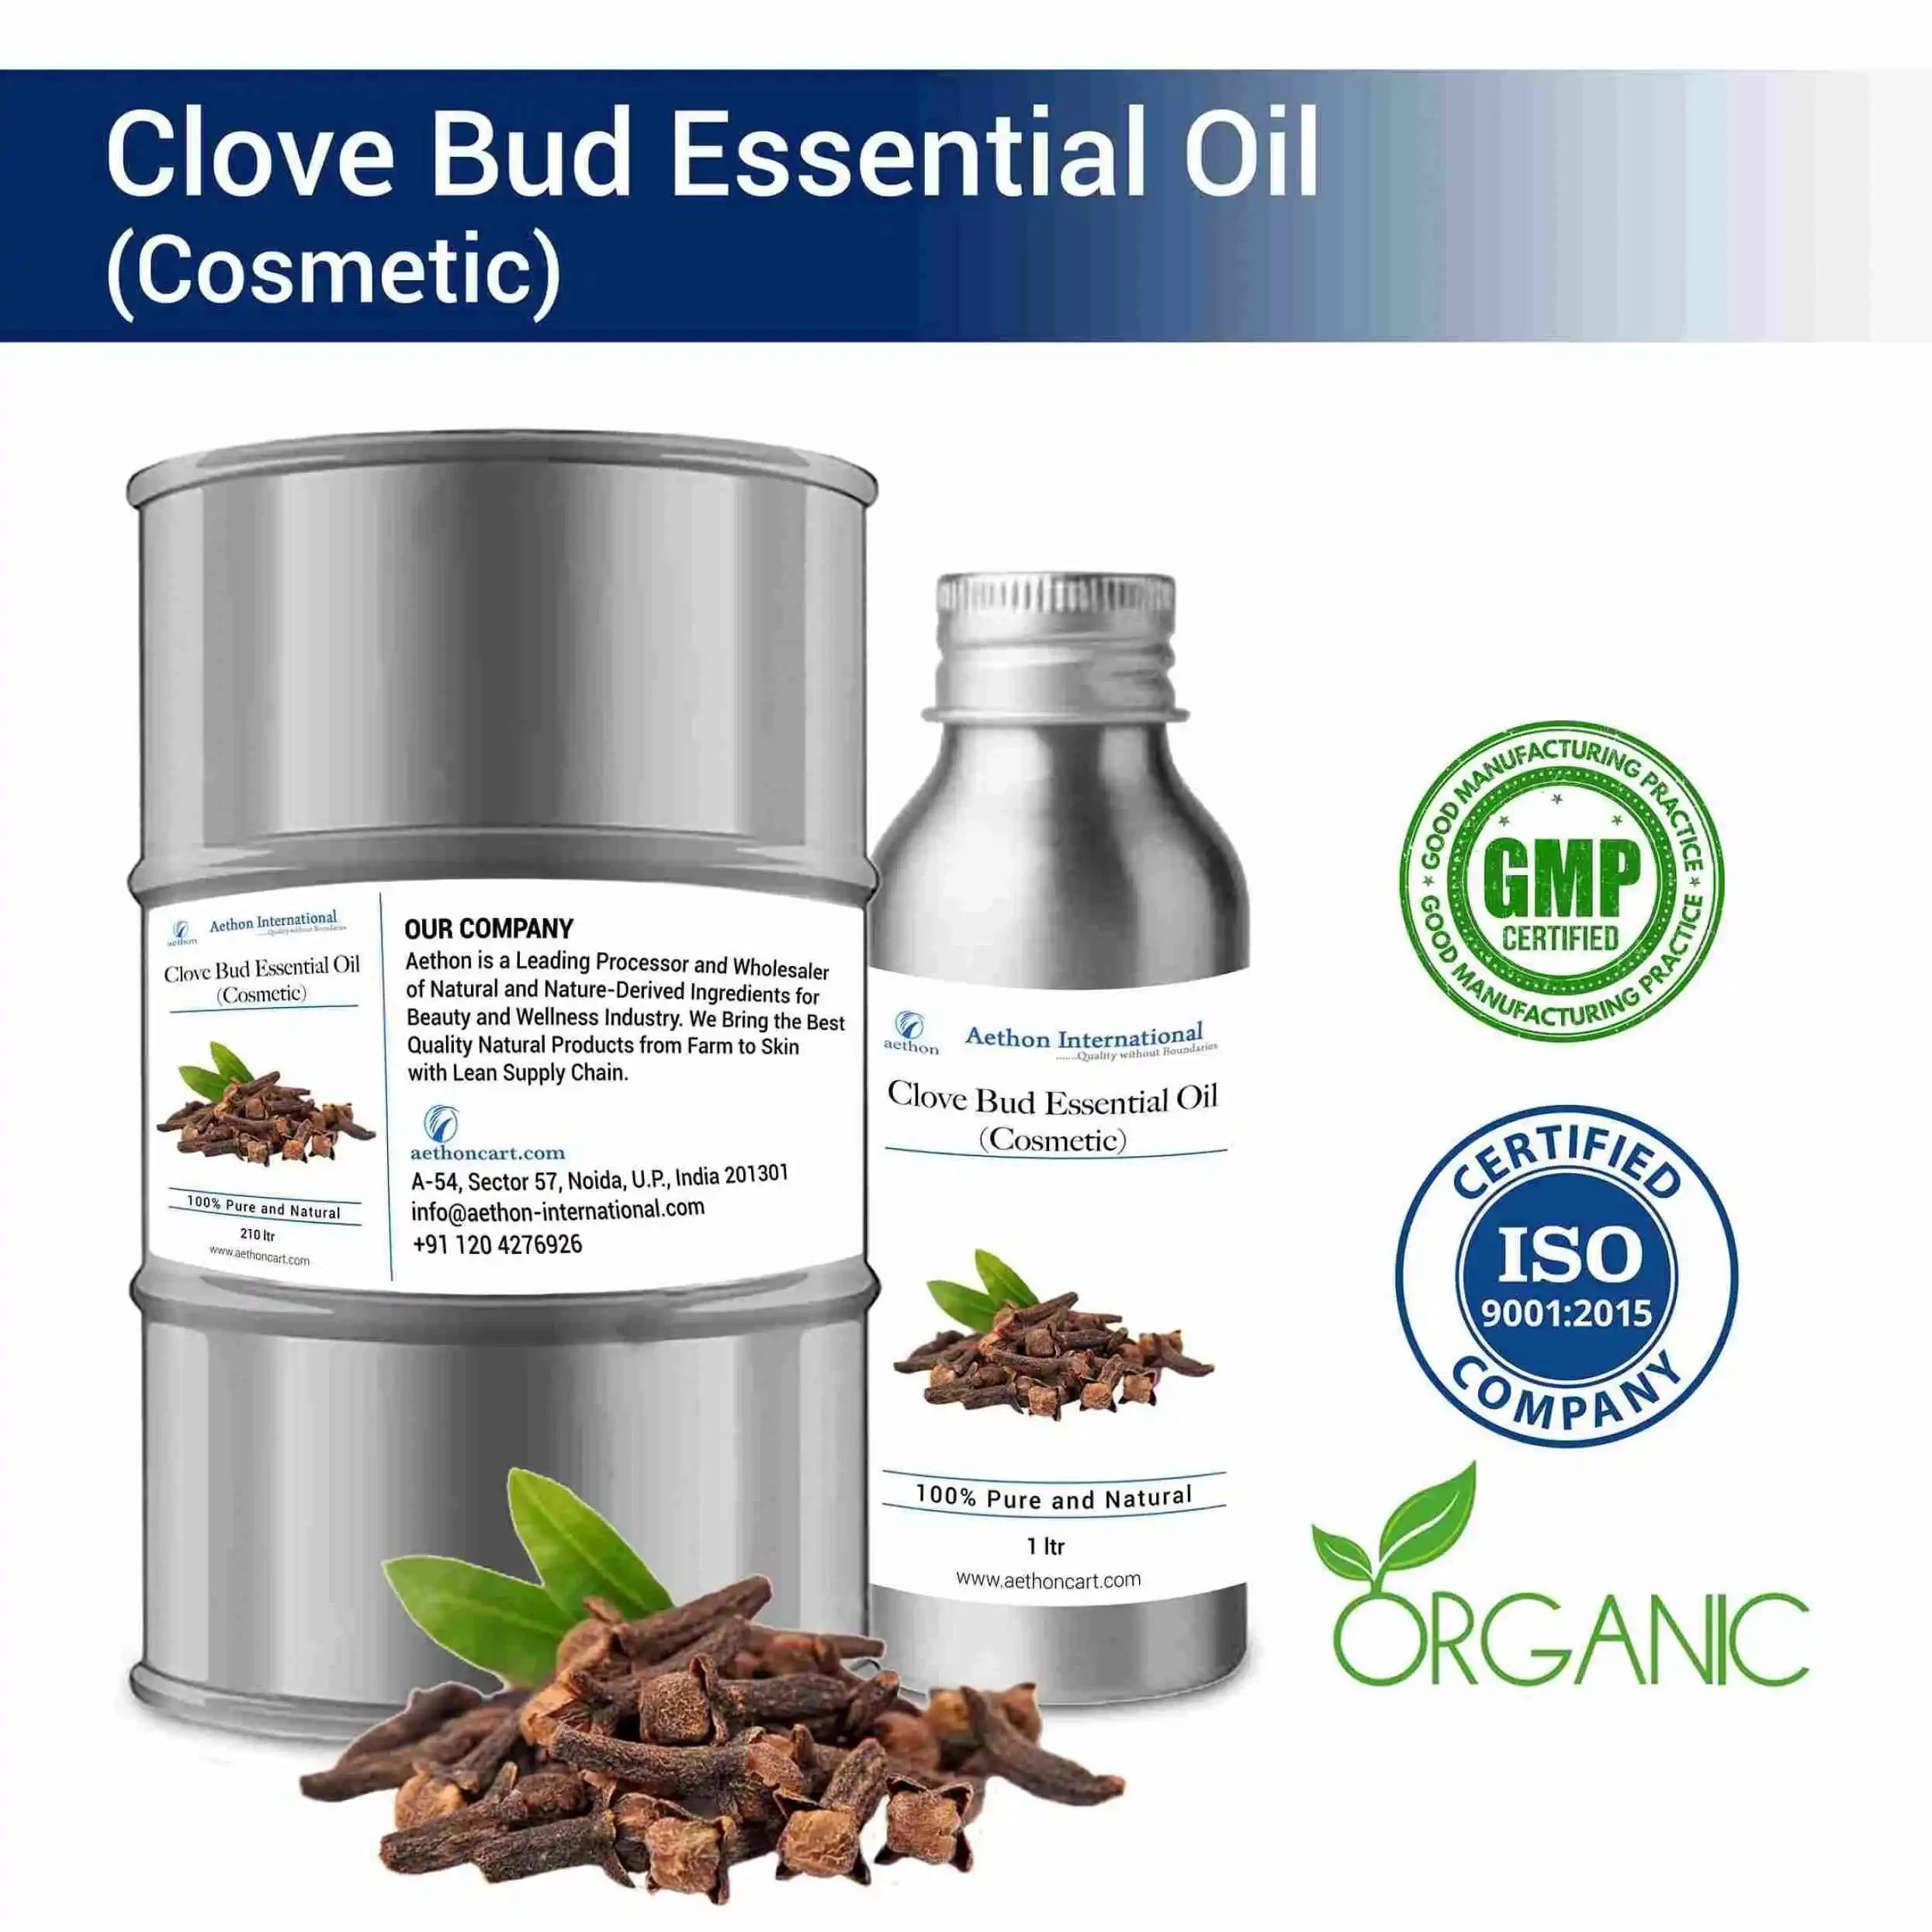 Clove Bud Essential Oil (Cosmetic)